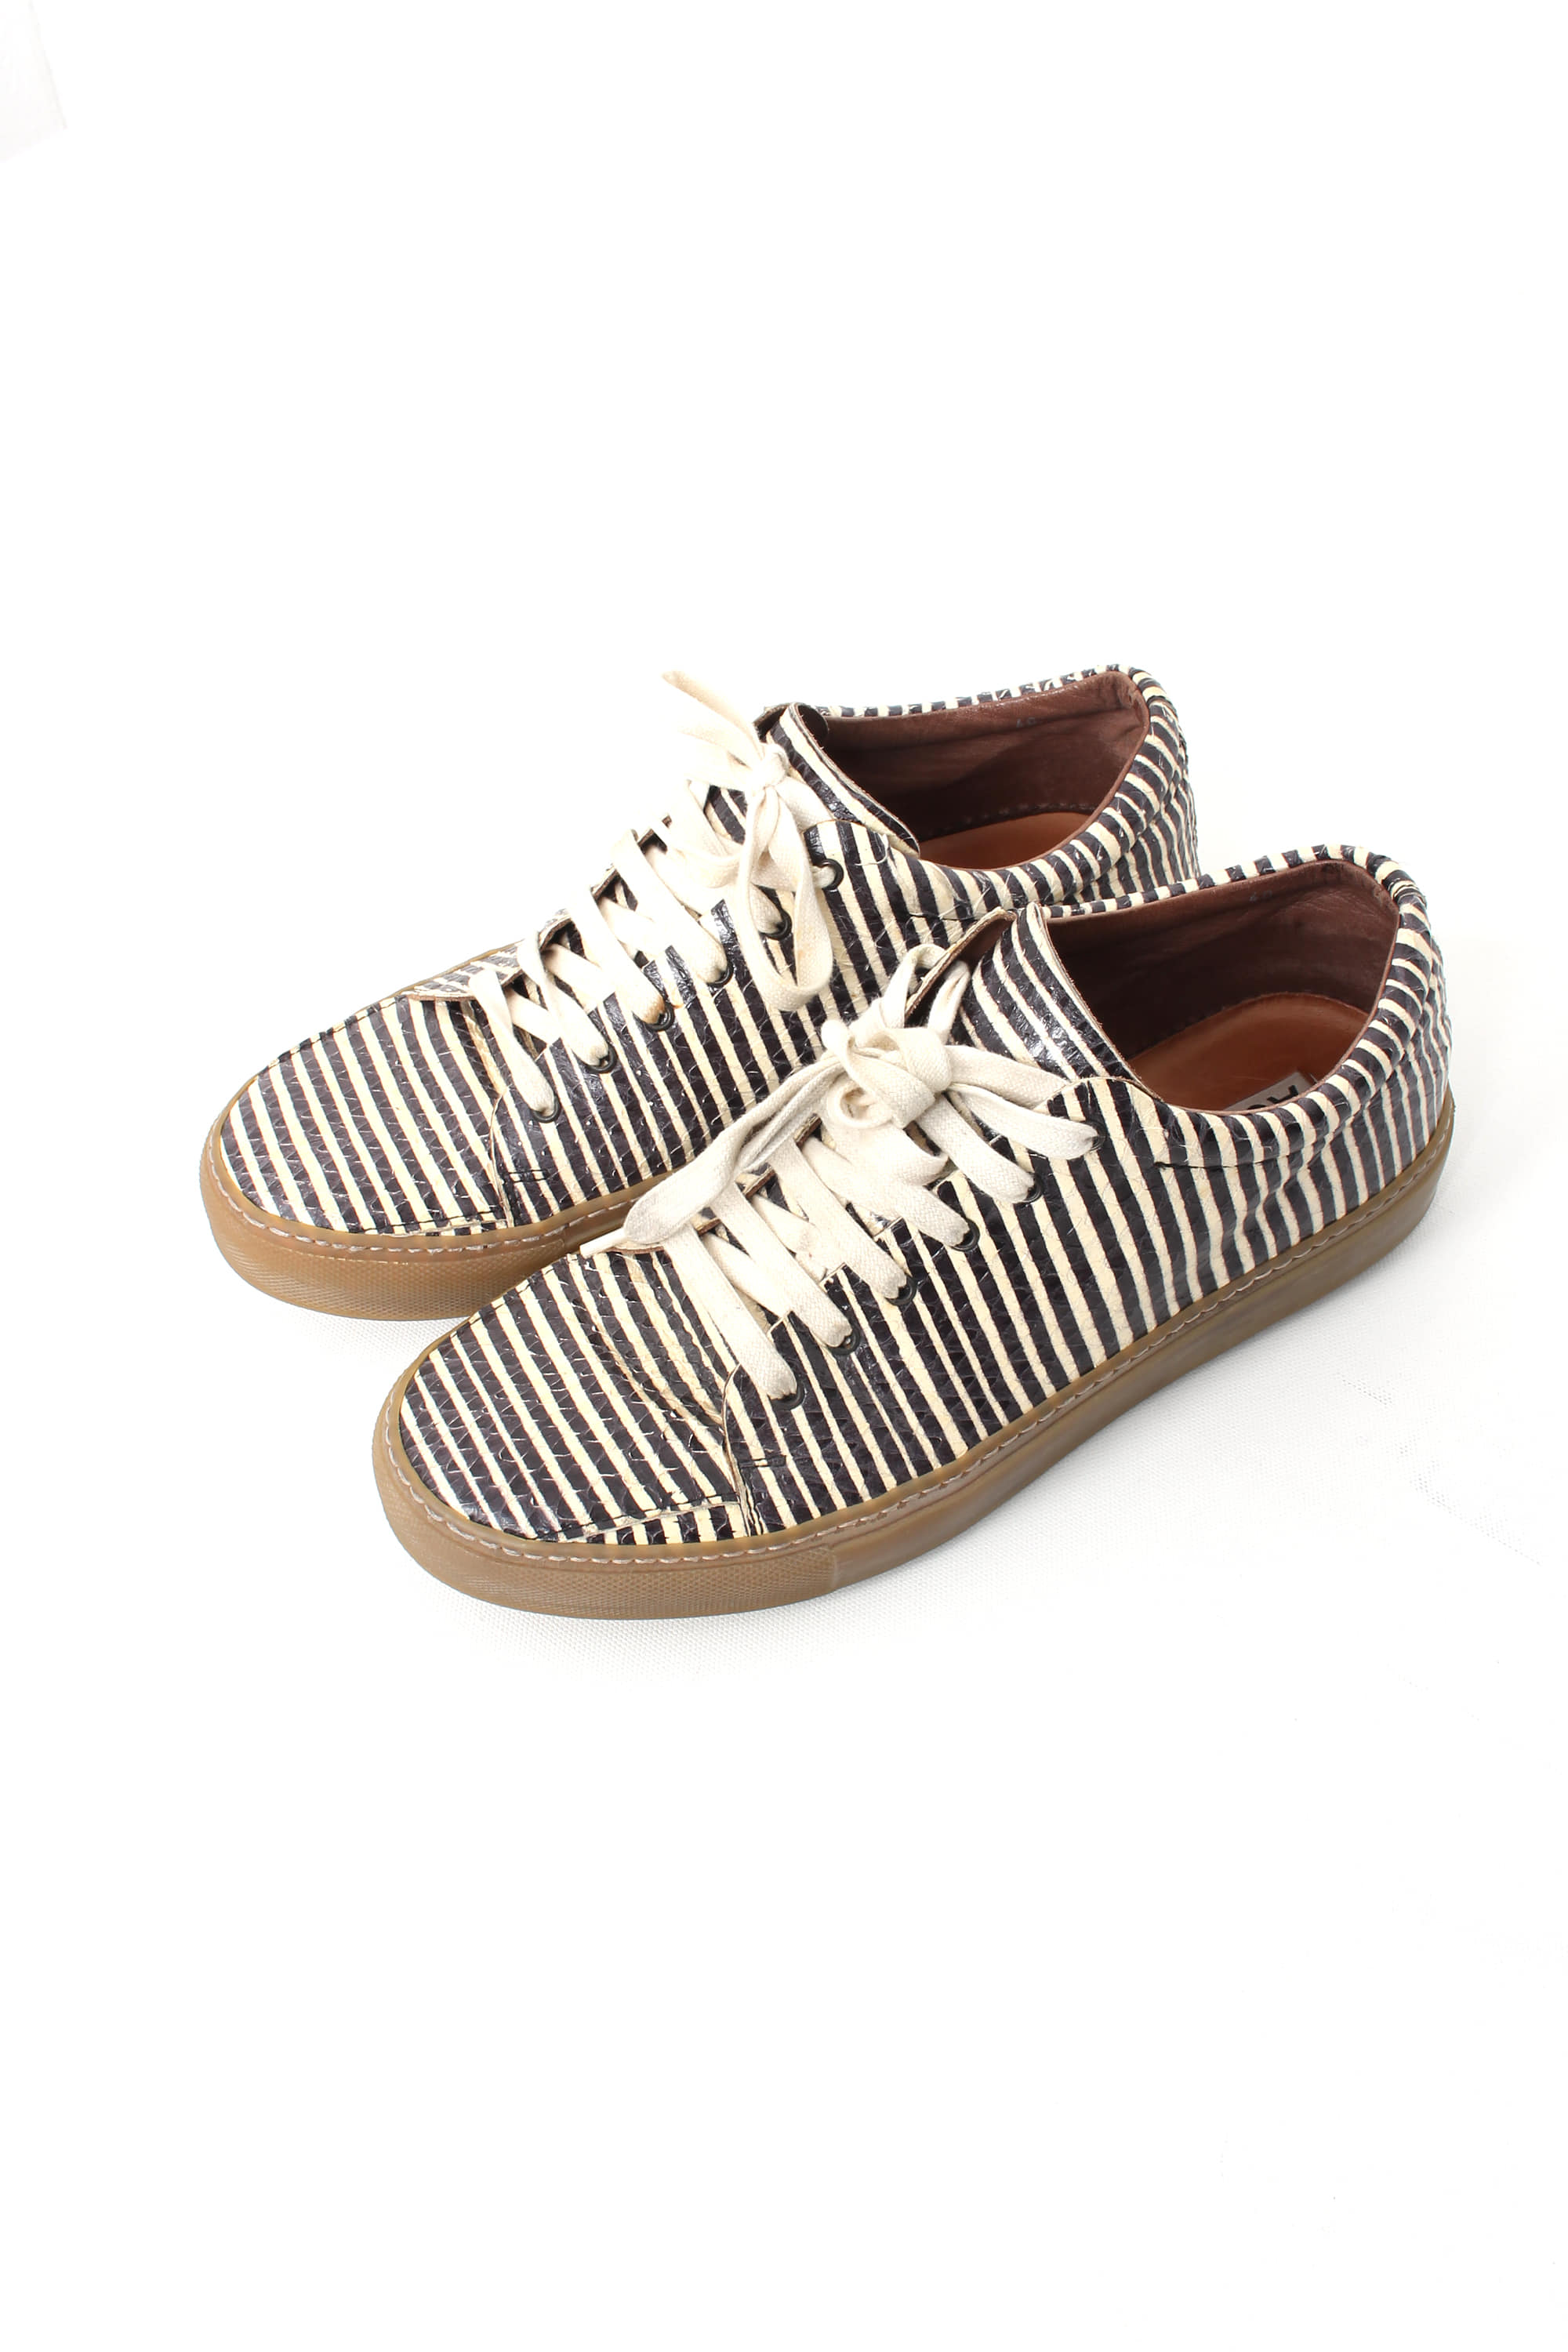 ACNE Stripe Shoes(260)